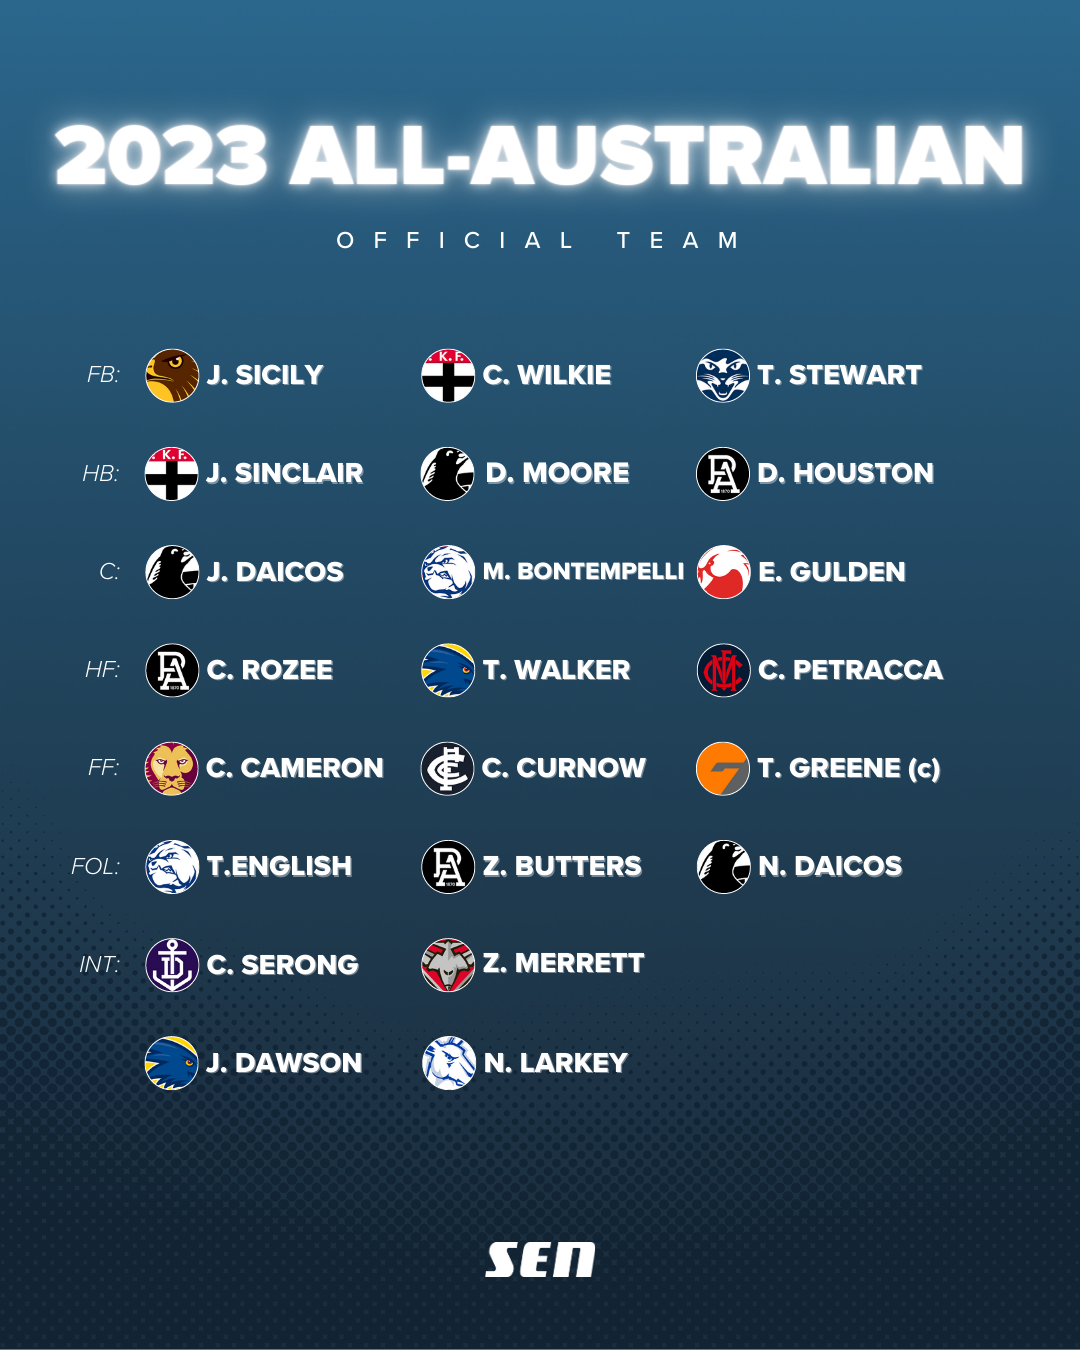 AFL officially announces 2023 AllAustralian team